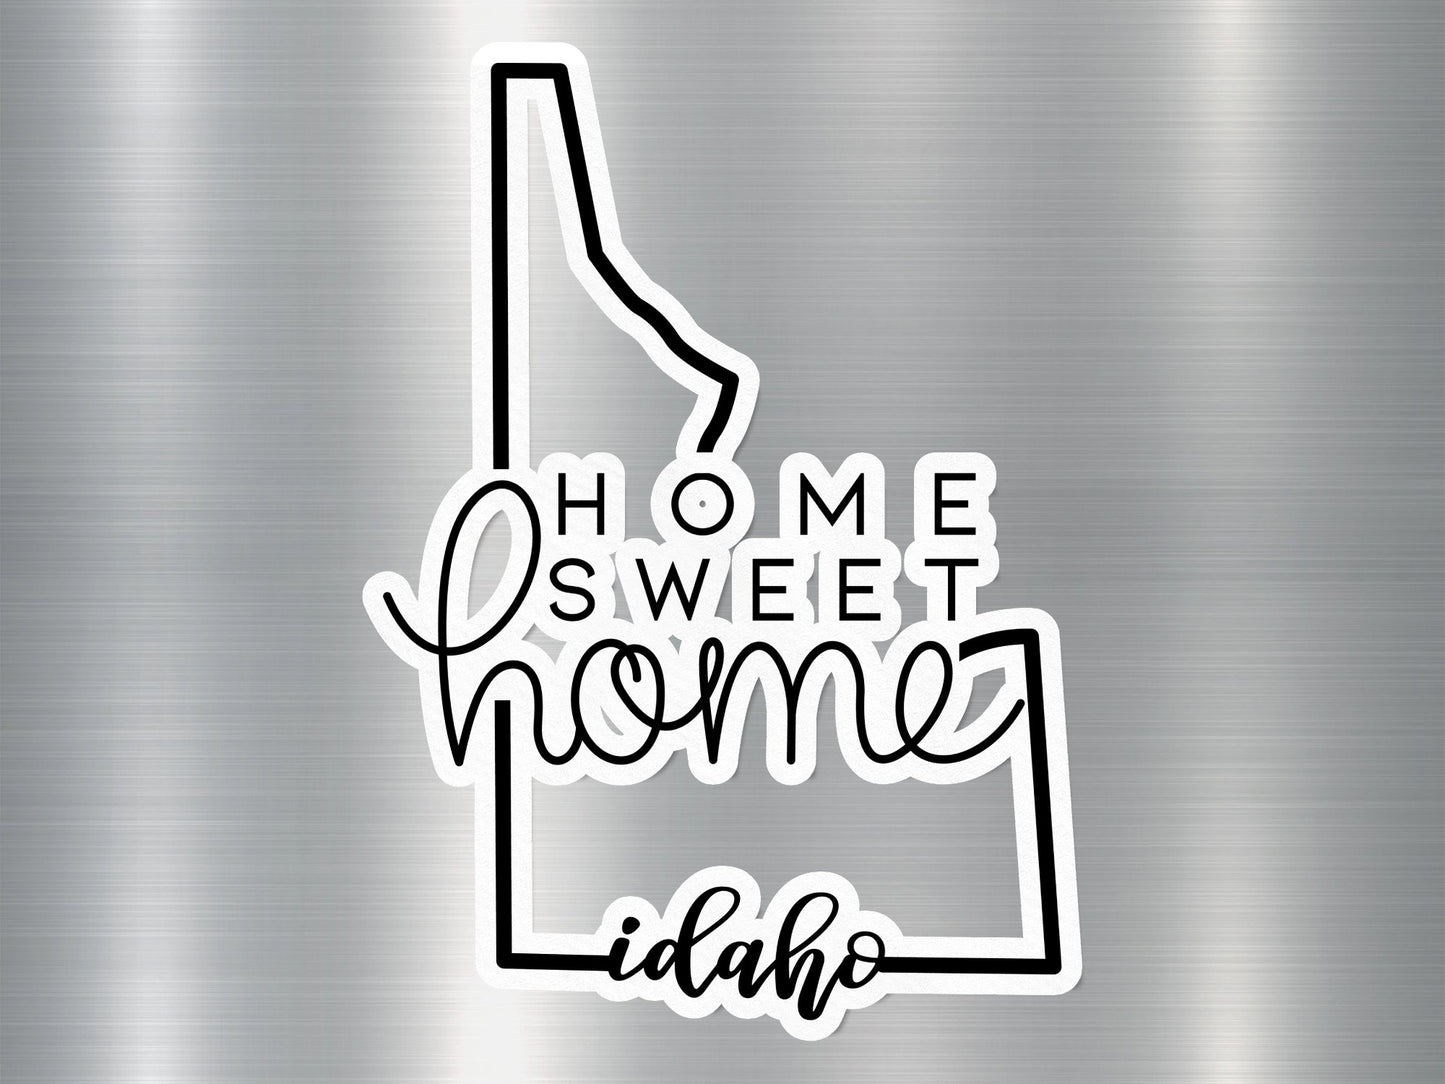 Home Sweet Home Idaho State Sticker